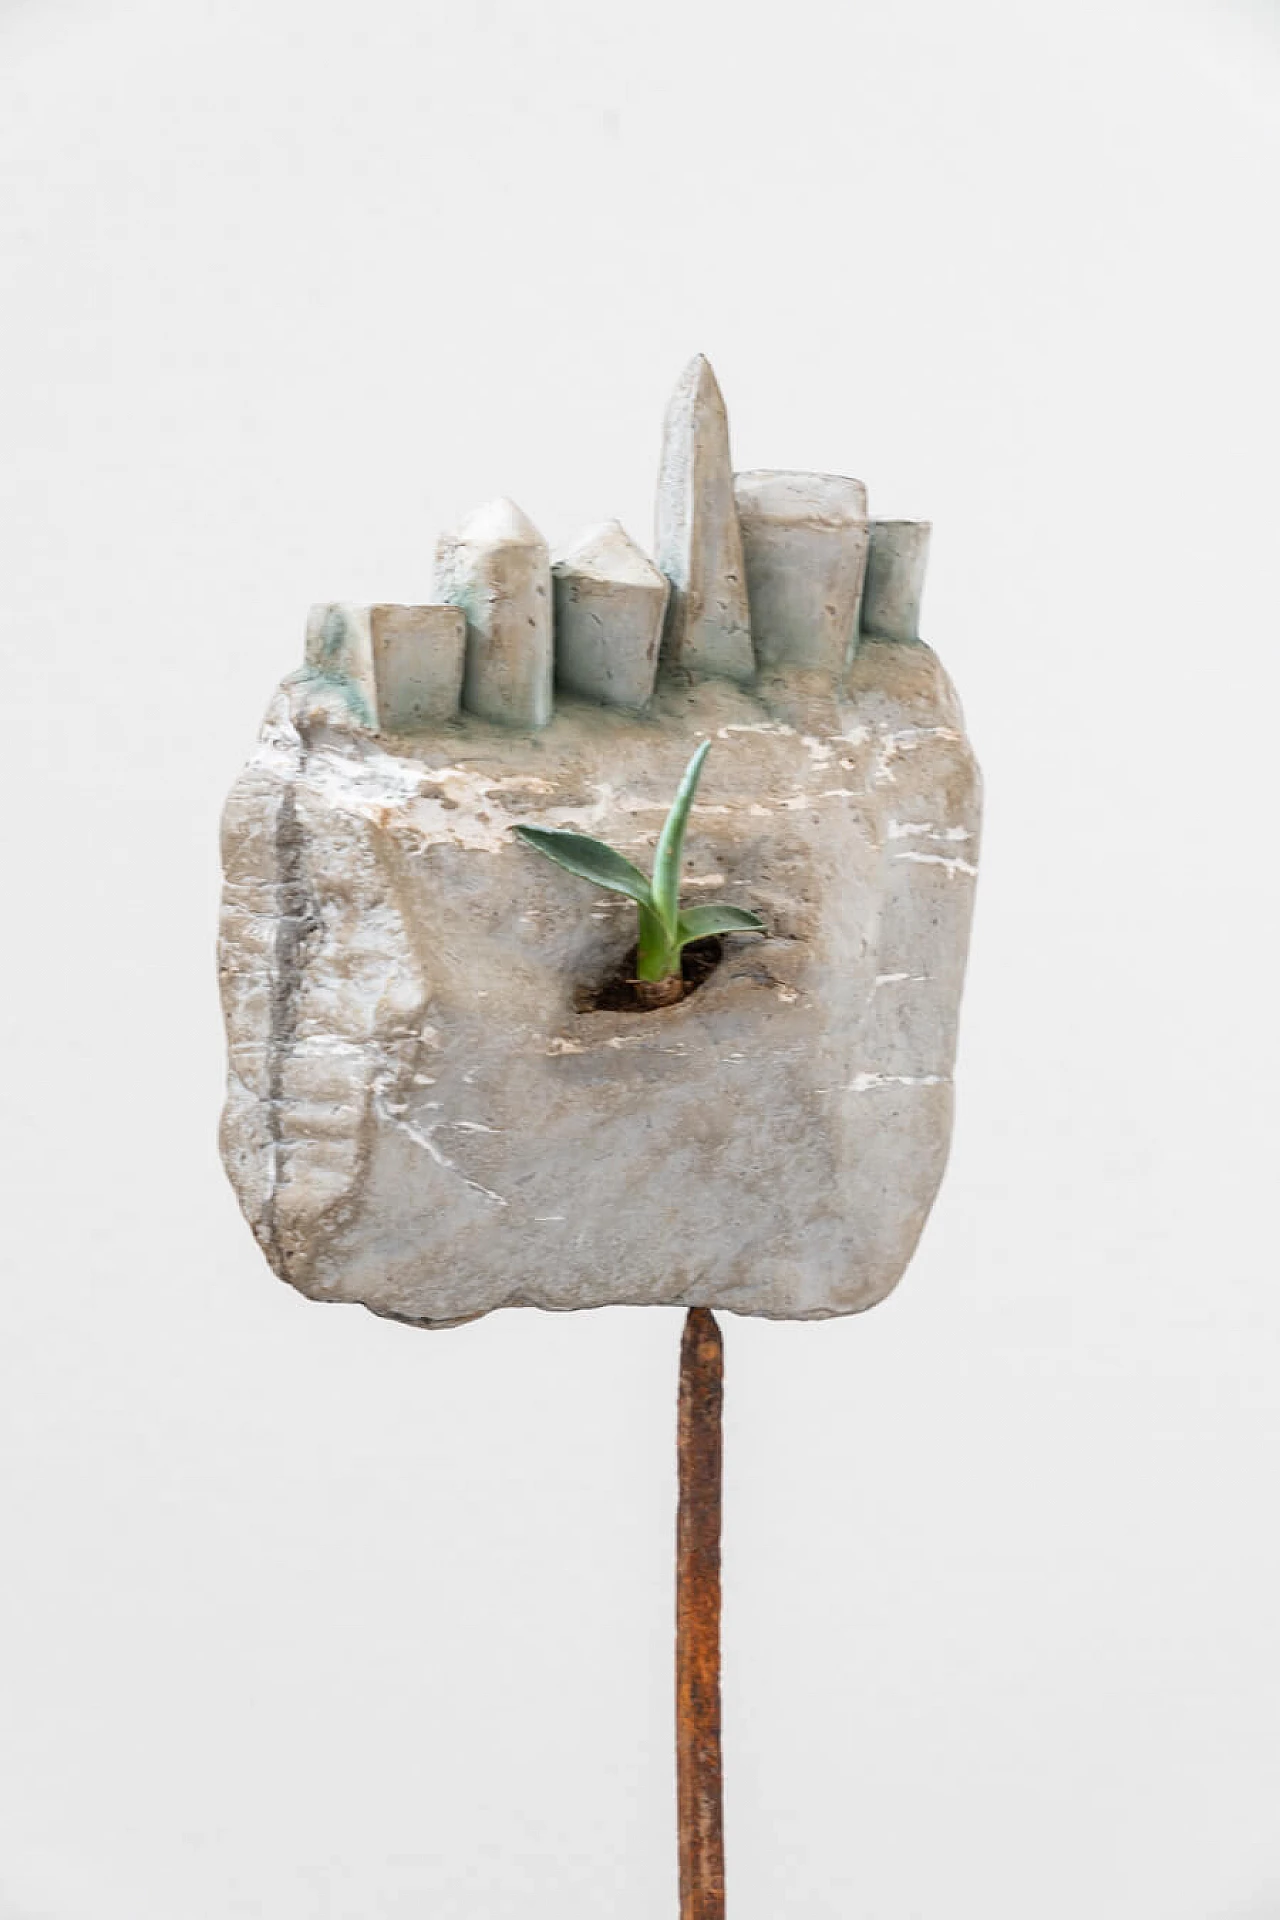 Tuniz Nicola, Ston sculpture/city Naka Zenobia, bamboo and zinc, 1990 8